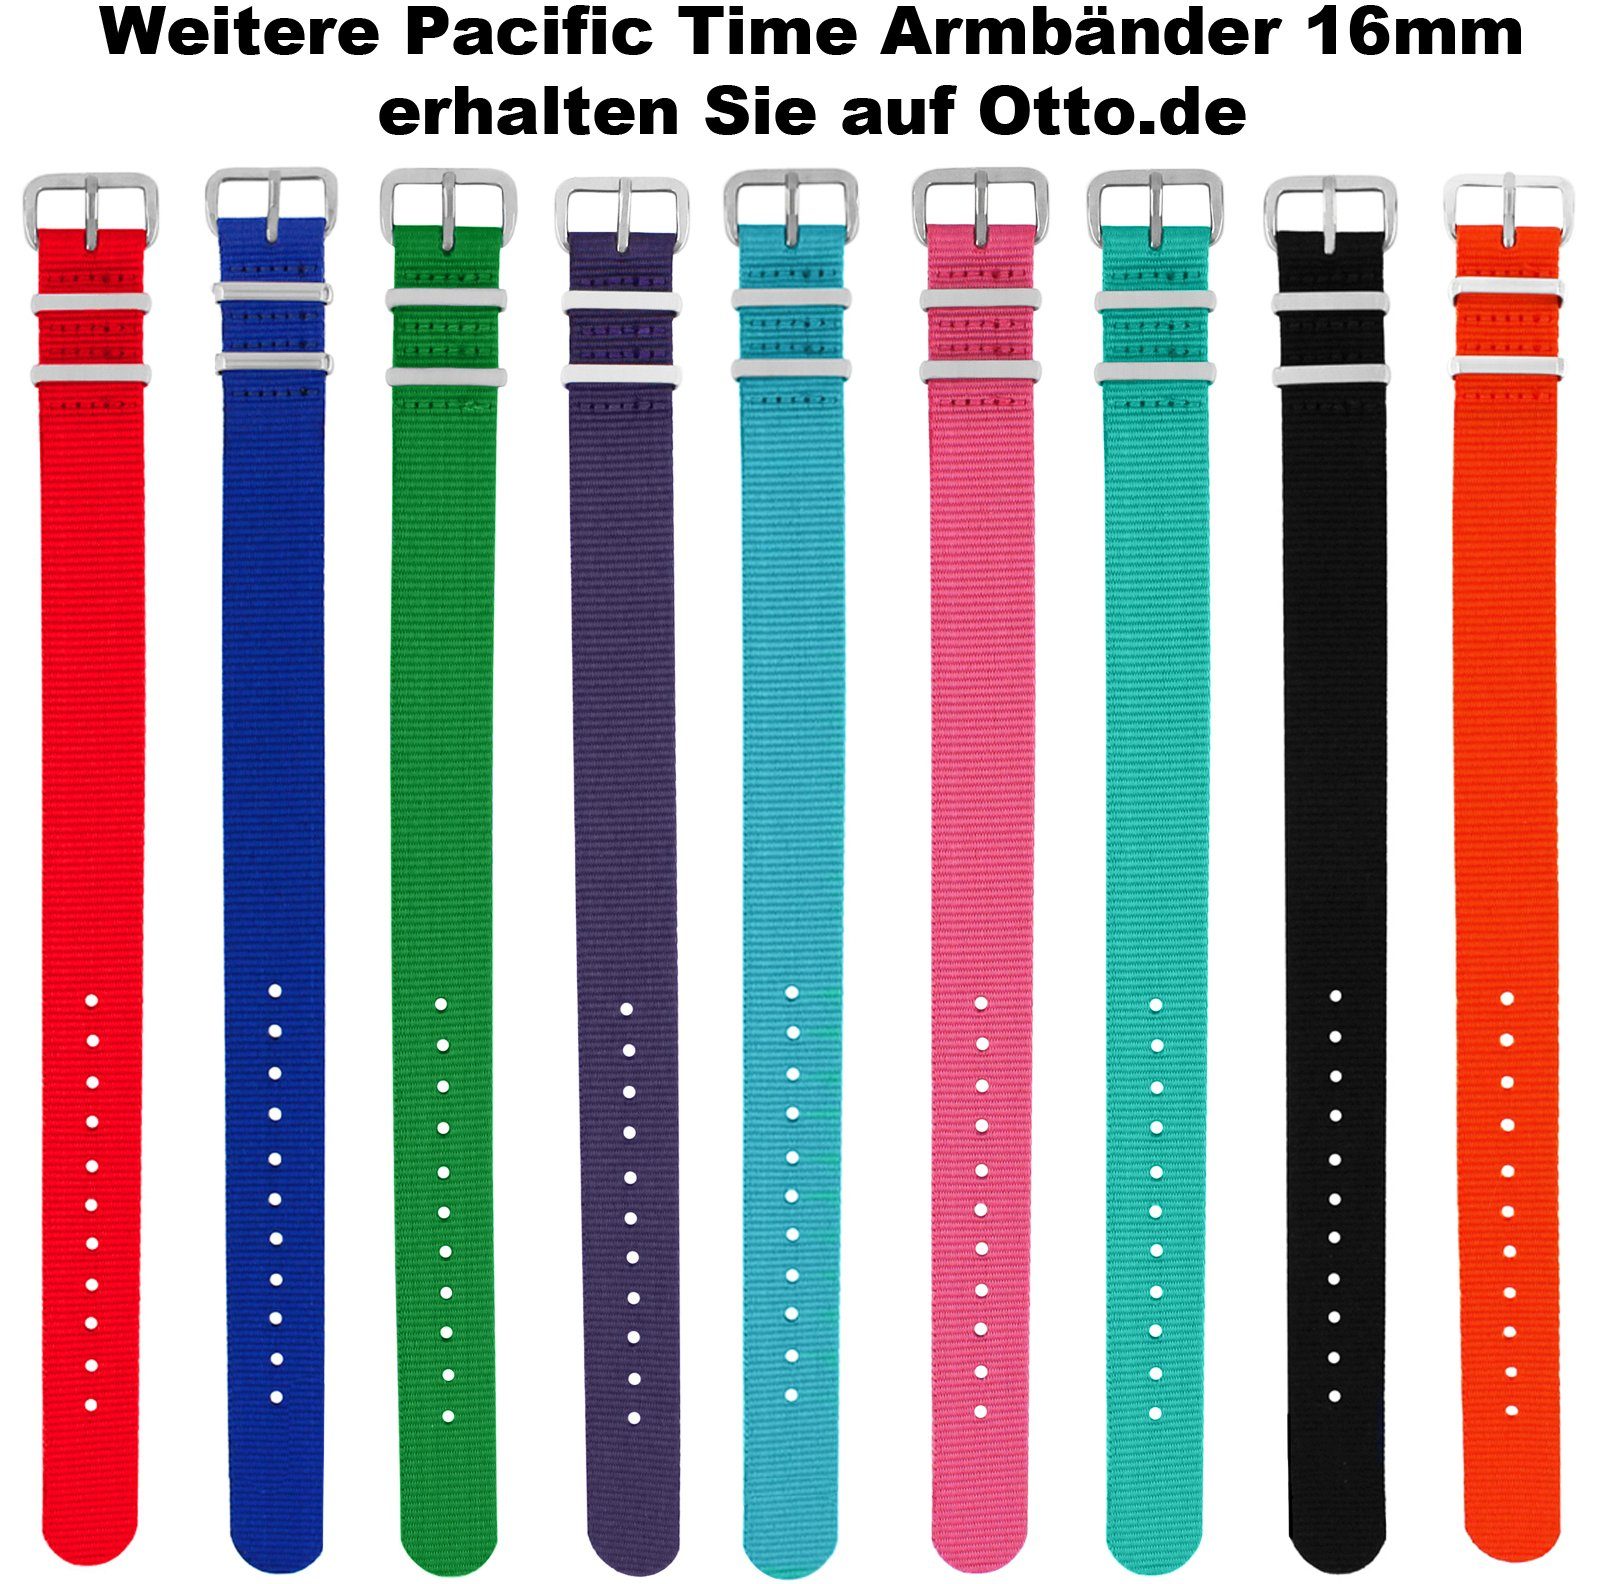 Versand Textil Uhrenarmband Time Wechselarmband 16mm, schwarz Gratis Pacific Nylon